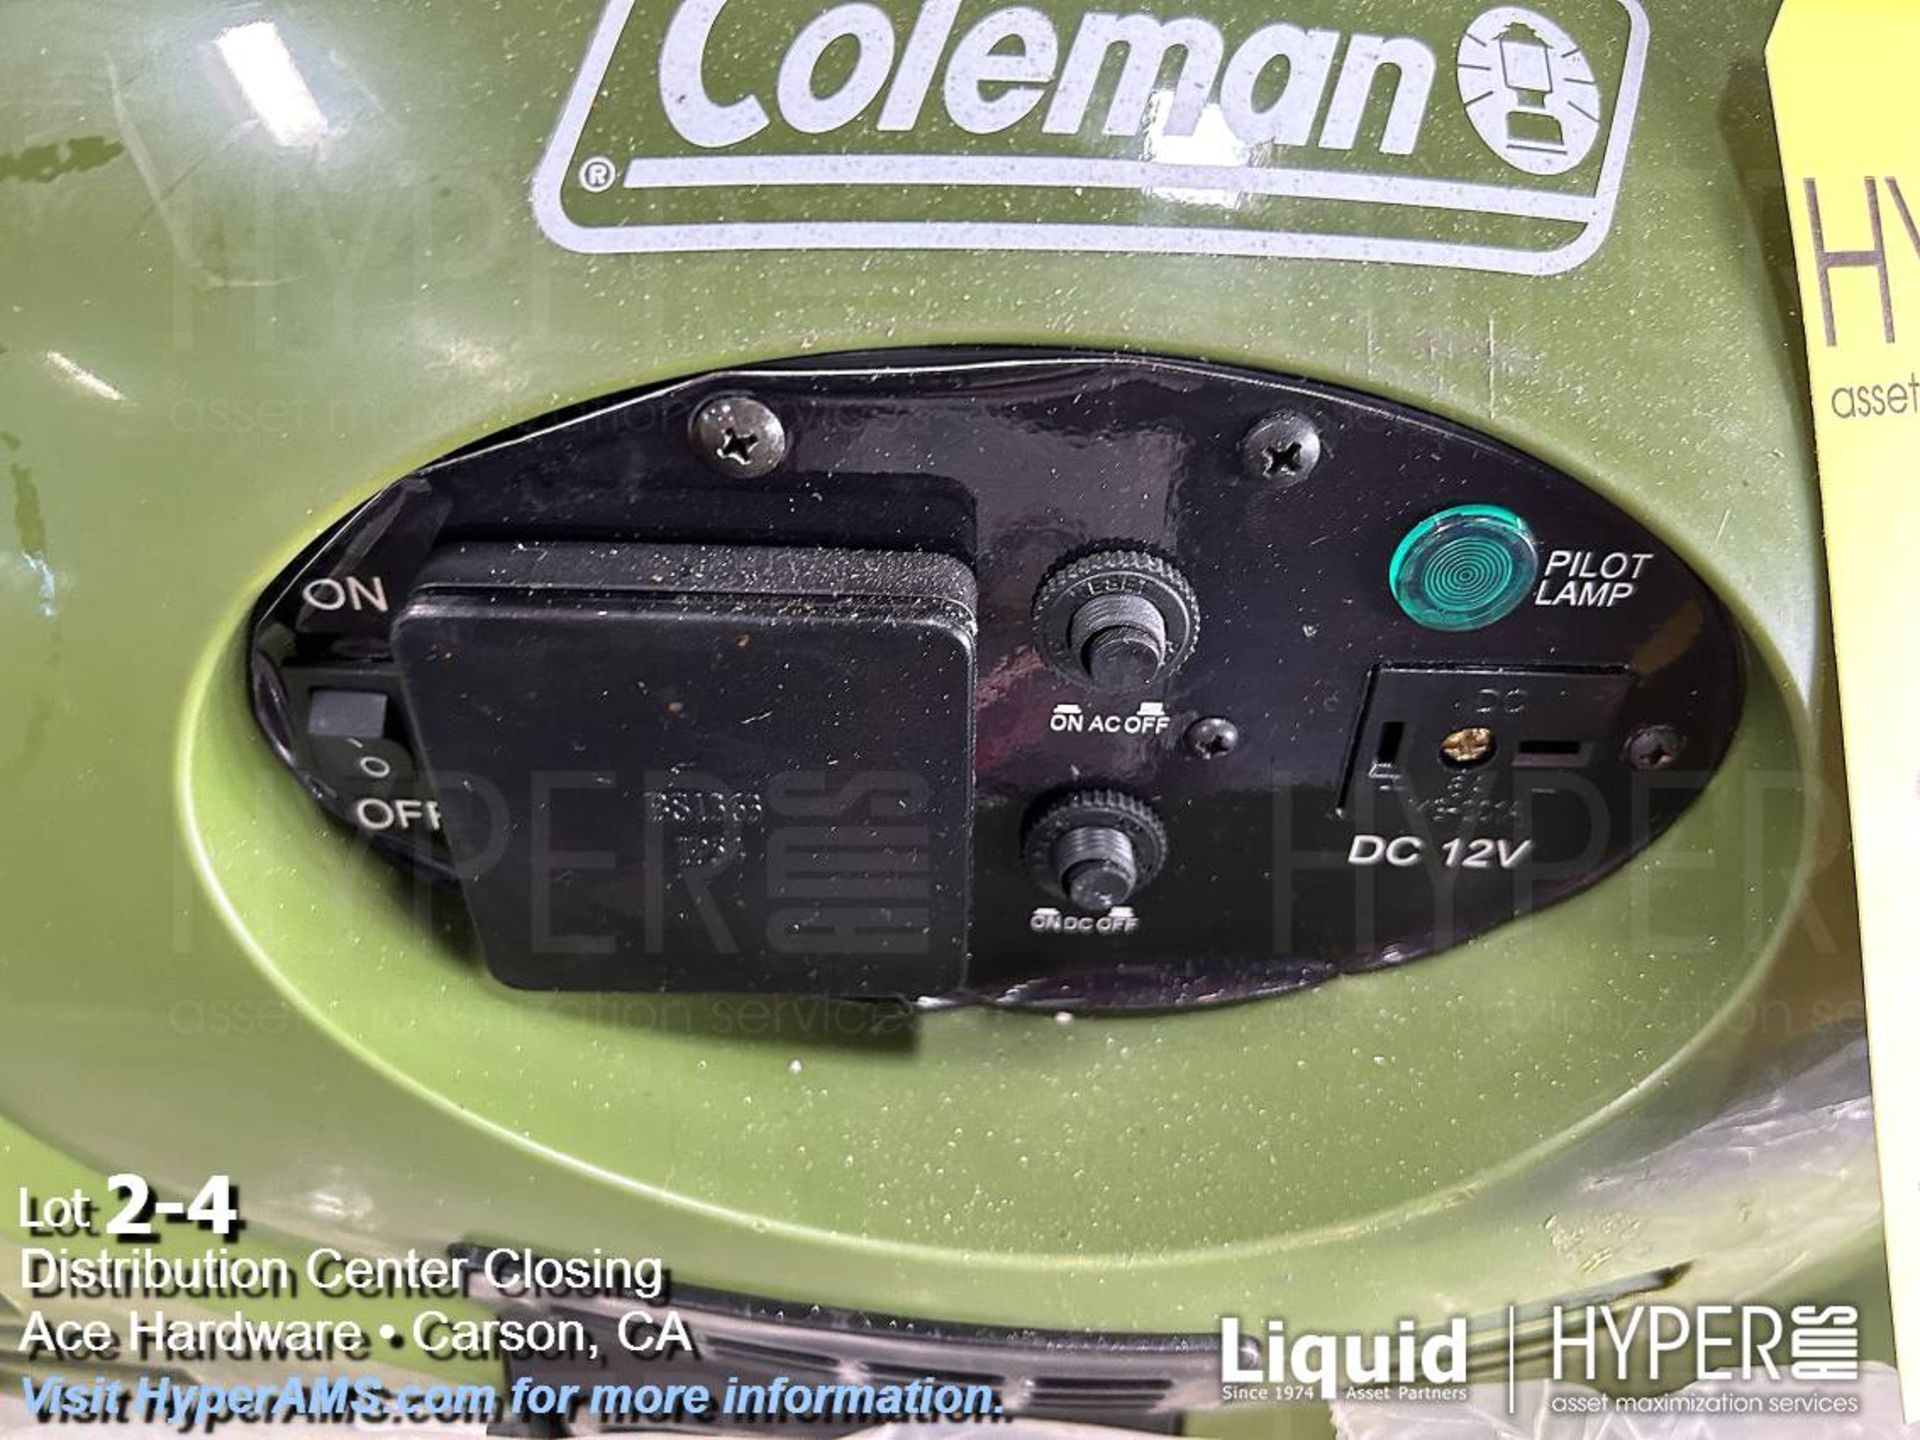 Coleman 1850w 220v generator - Image 4 of 5